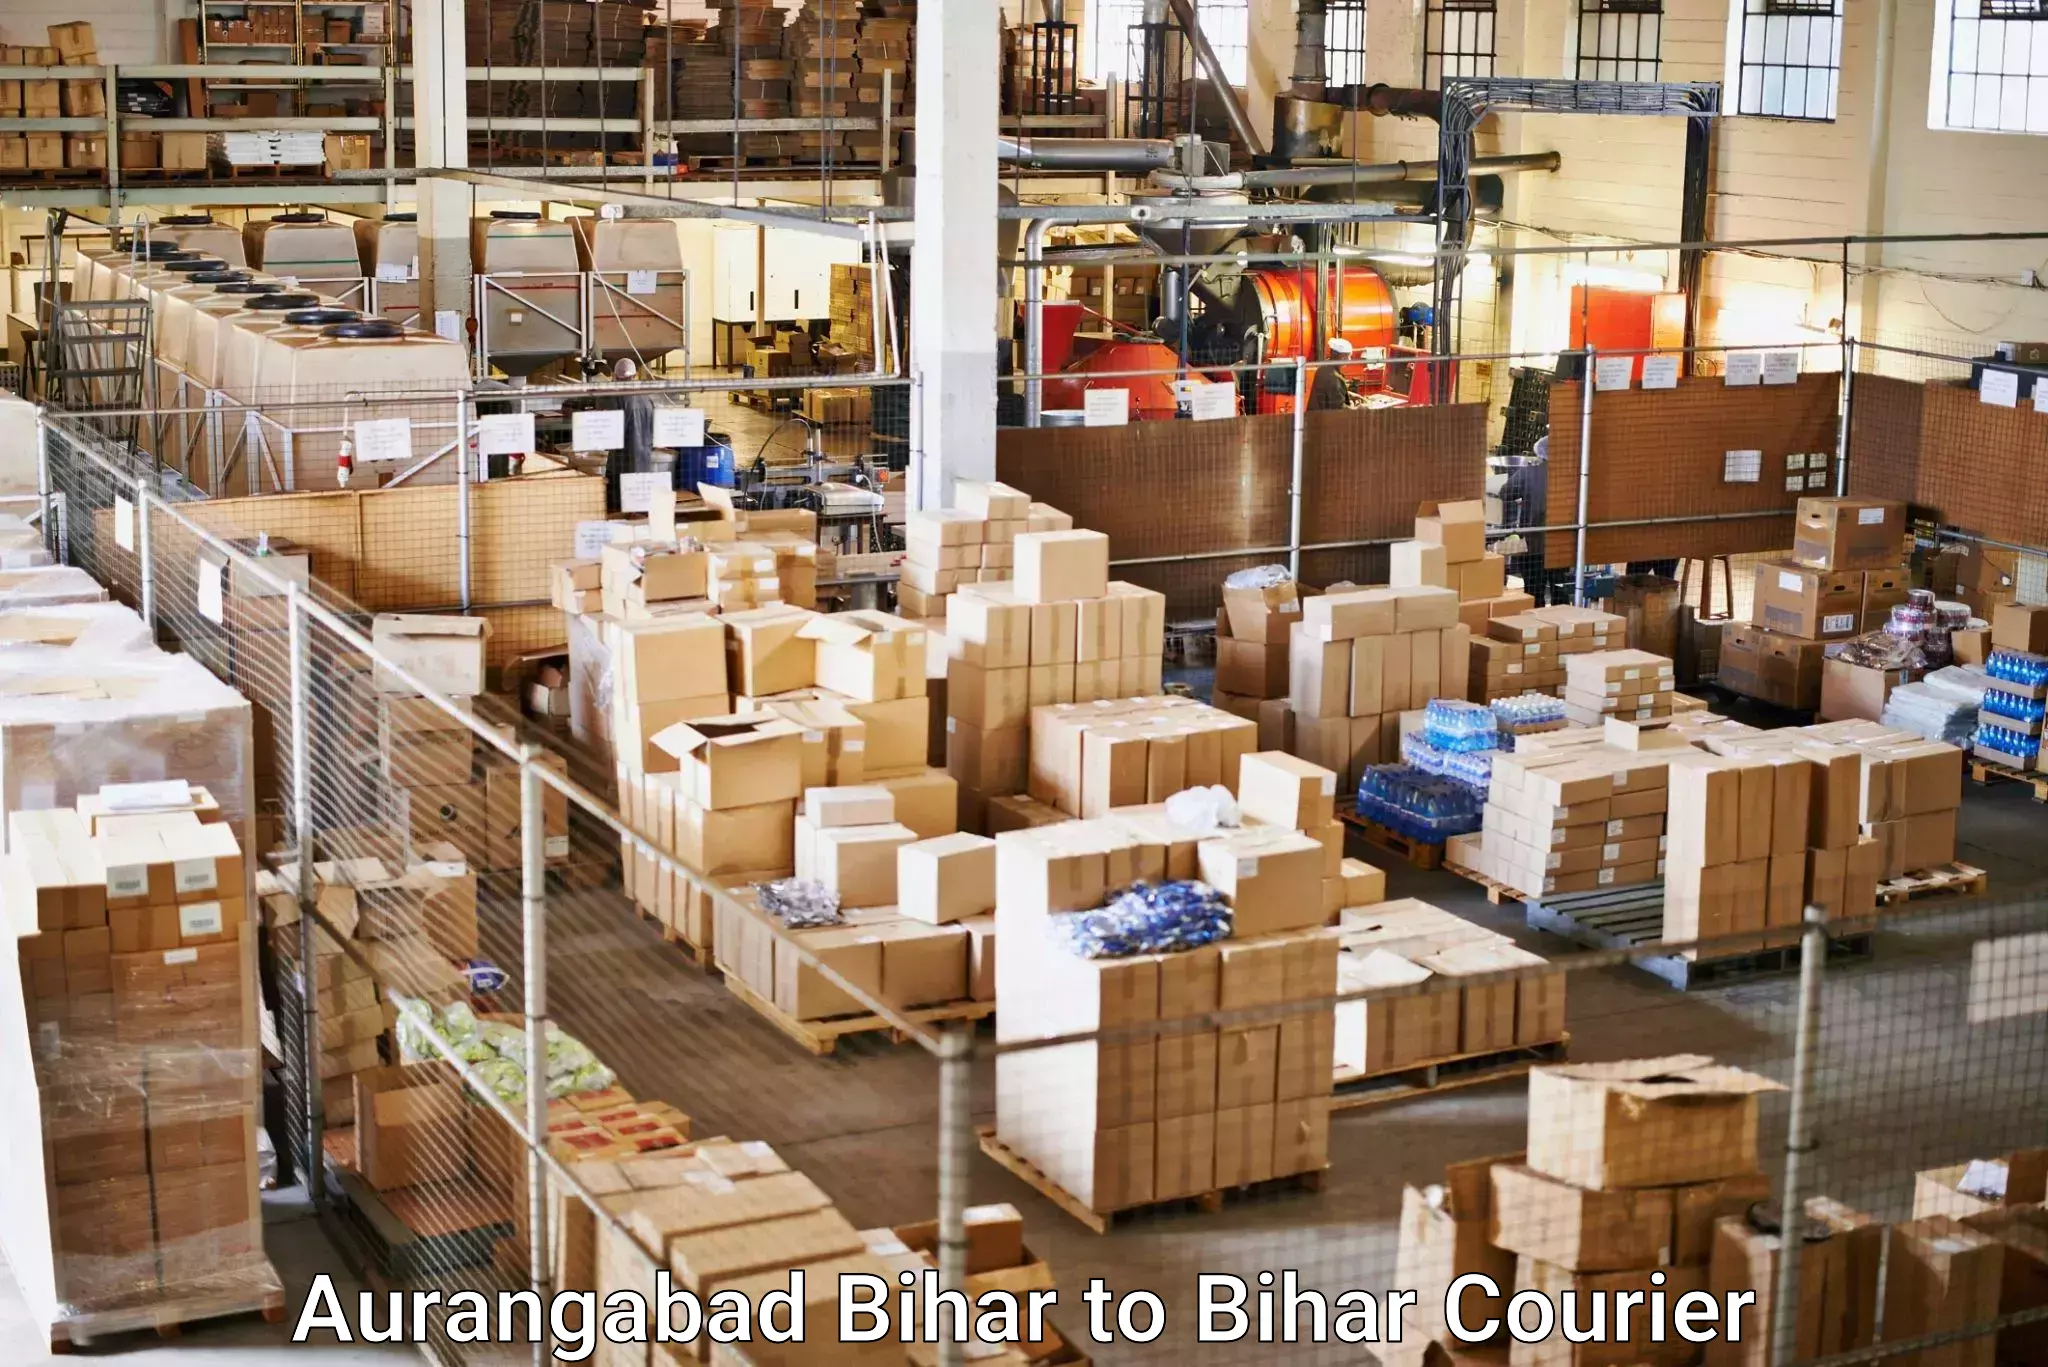 Bulk shipping discounts Aurangabad Bihar to Bihar